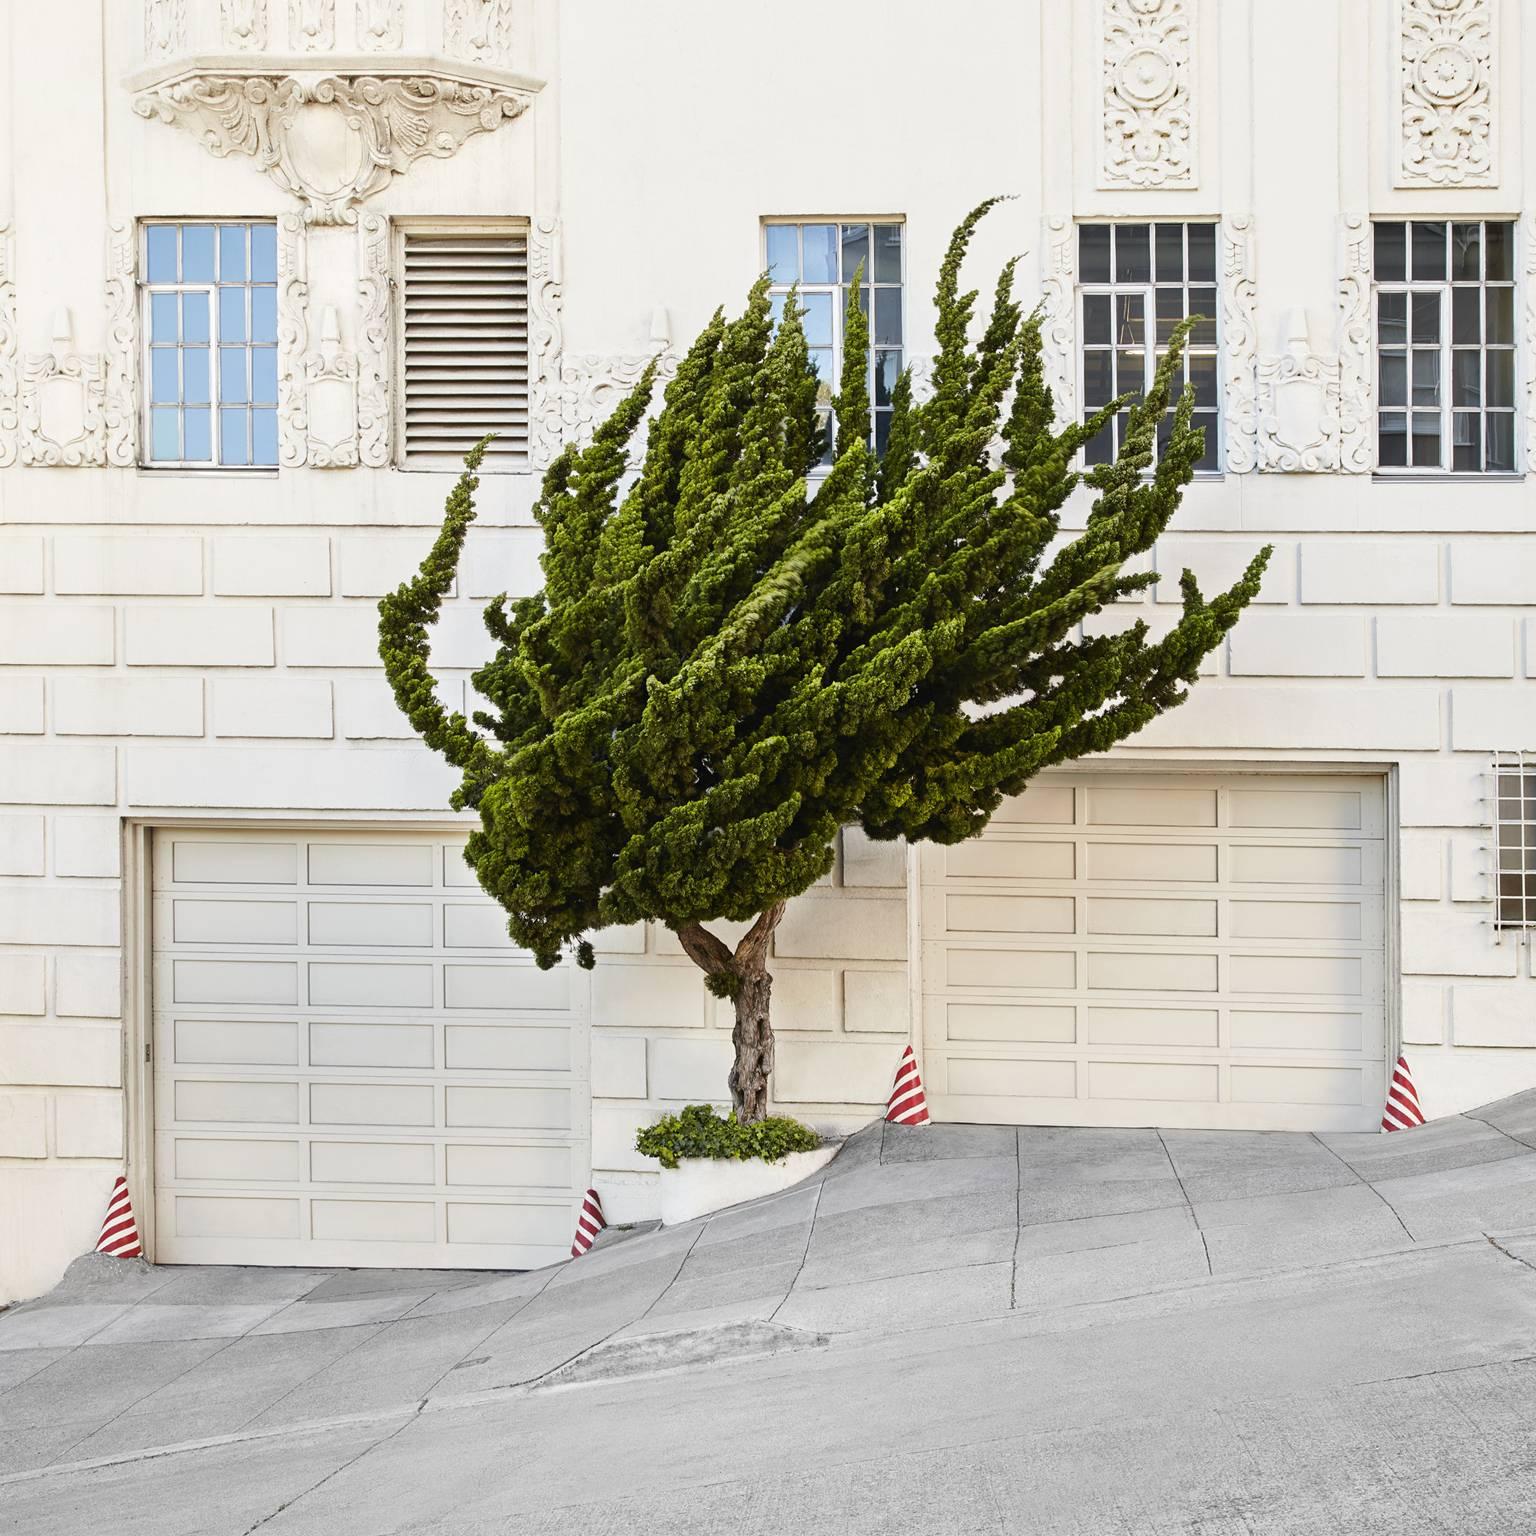 Topiary I - large format photograph of ornamental shaped urban street tree